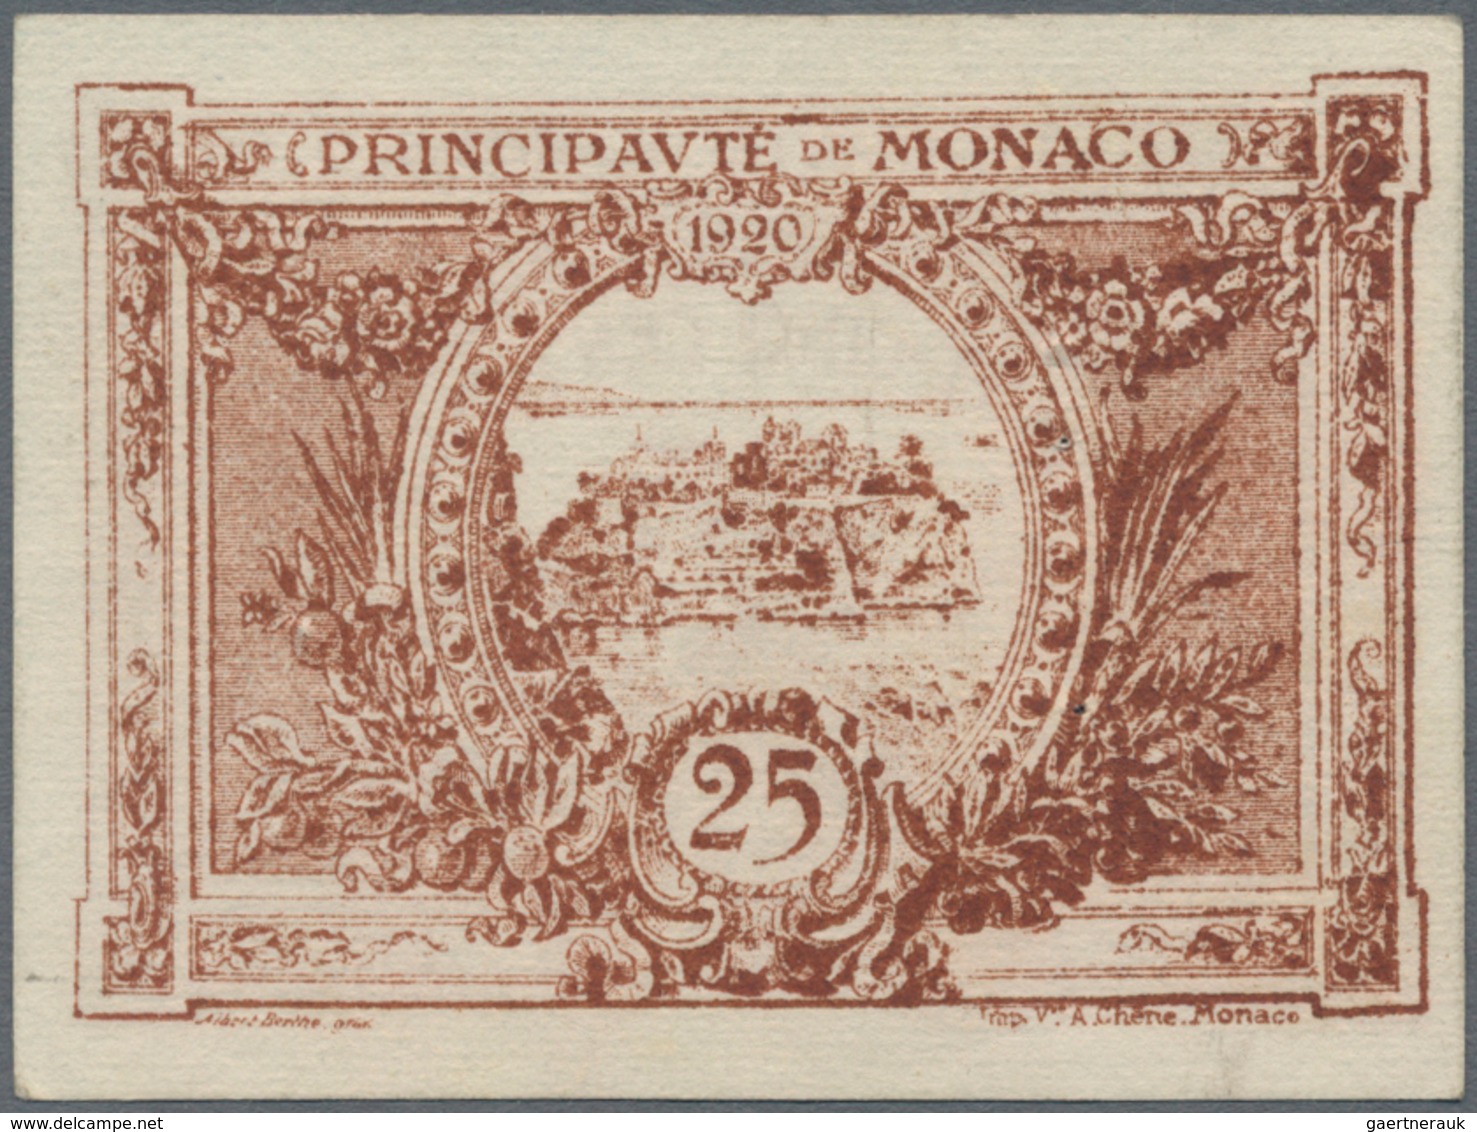 Monaco: Principauté De Monaco 25 Centimes 1920, P.1a, Almost Perfect Condition, Completely Unfolded, - Monaco